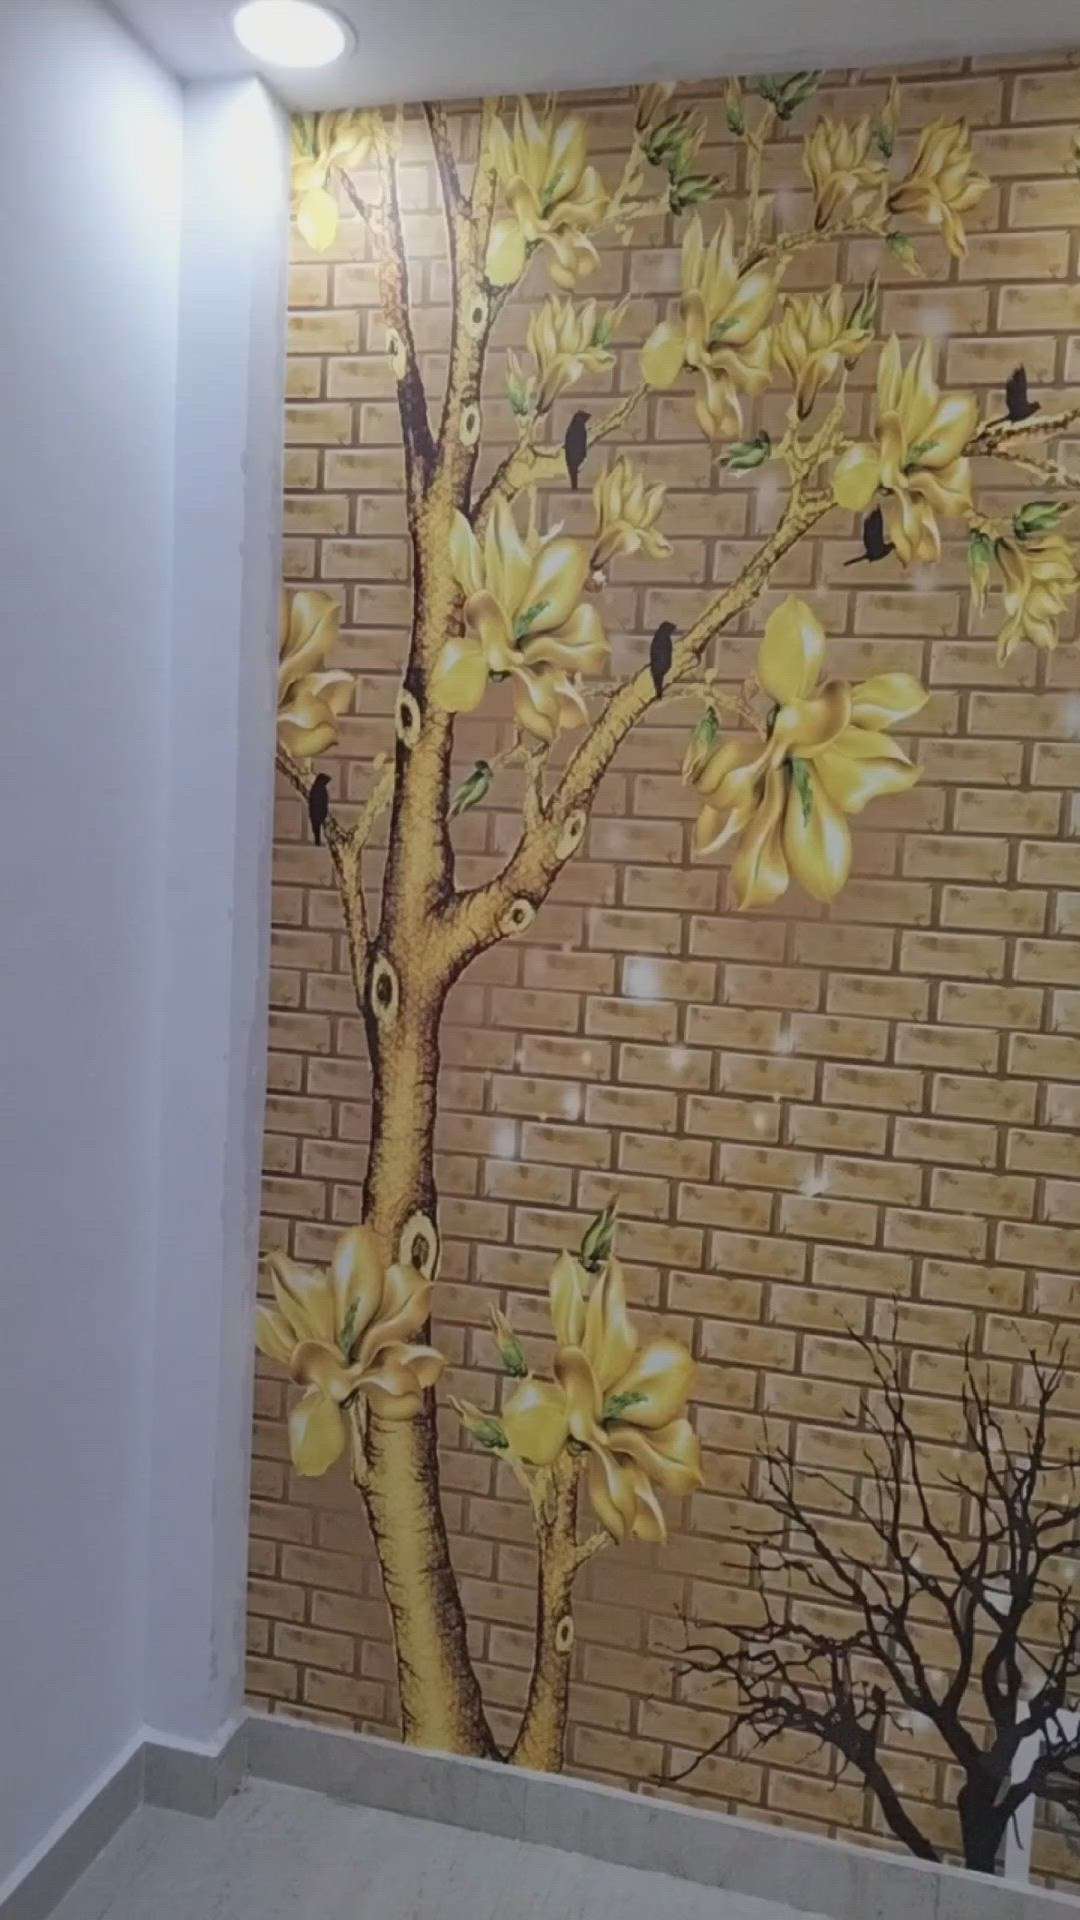 #WALL_PAPER  #NEW_PATTERN  #interiorwallpaper  #HomeDecor  #InteriorDesigner  #customized_wallpaper  #homedecoration  #trendingdesign  #uniquedesigns  #LivingRoomWallPaper  #BedroomDesigns  #diningroomdecor